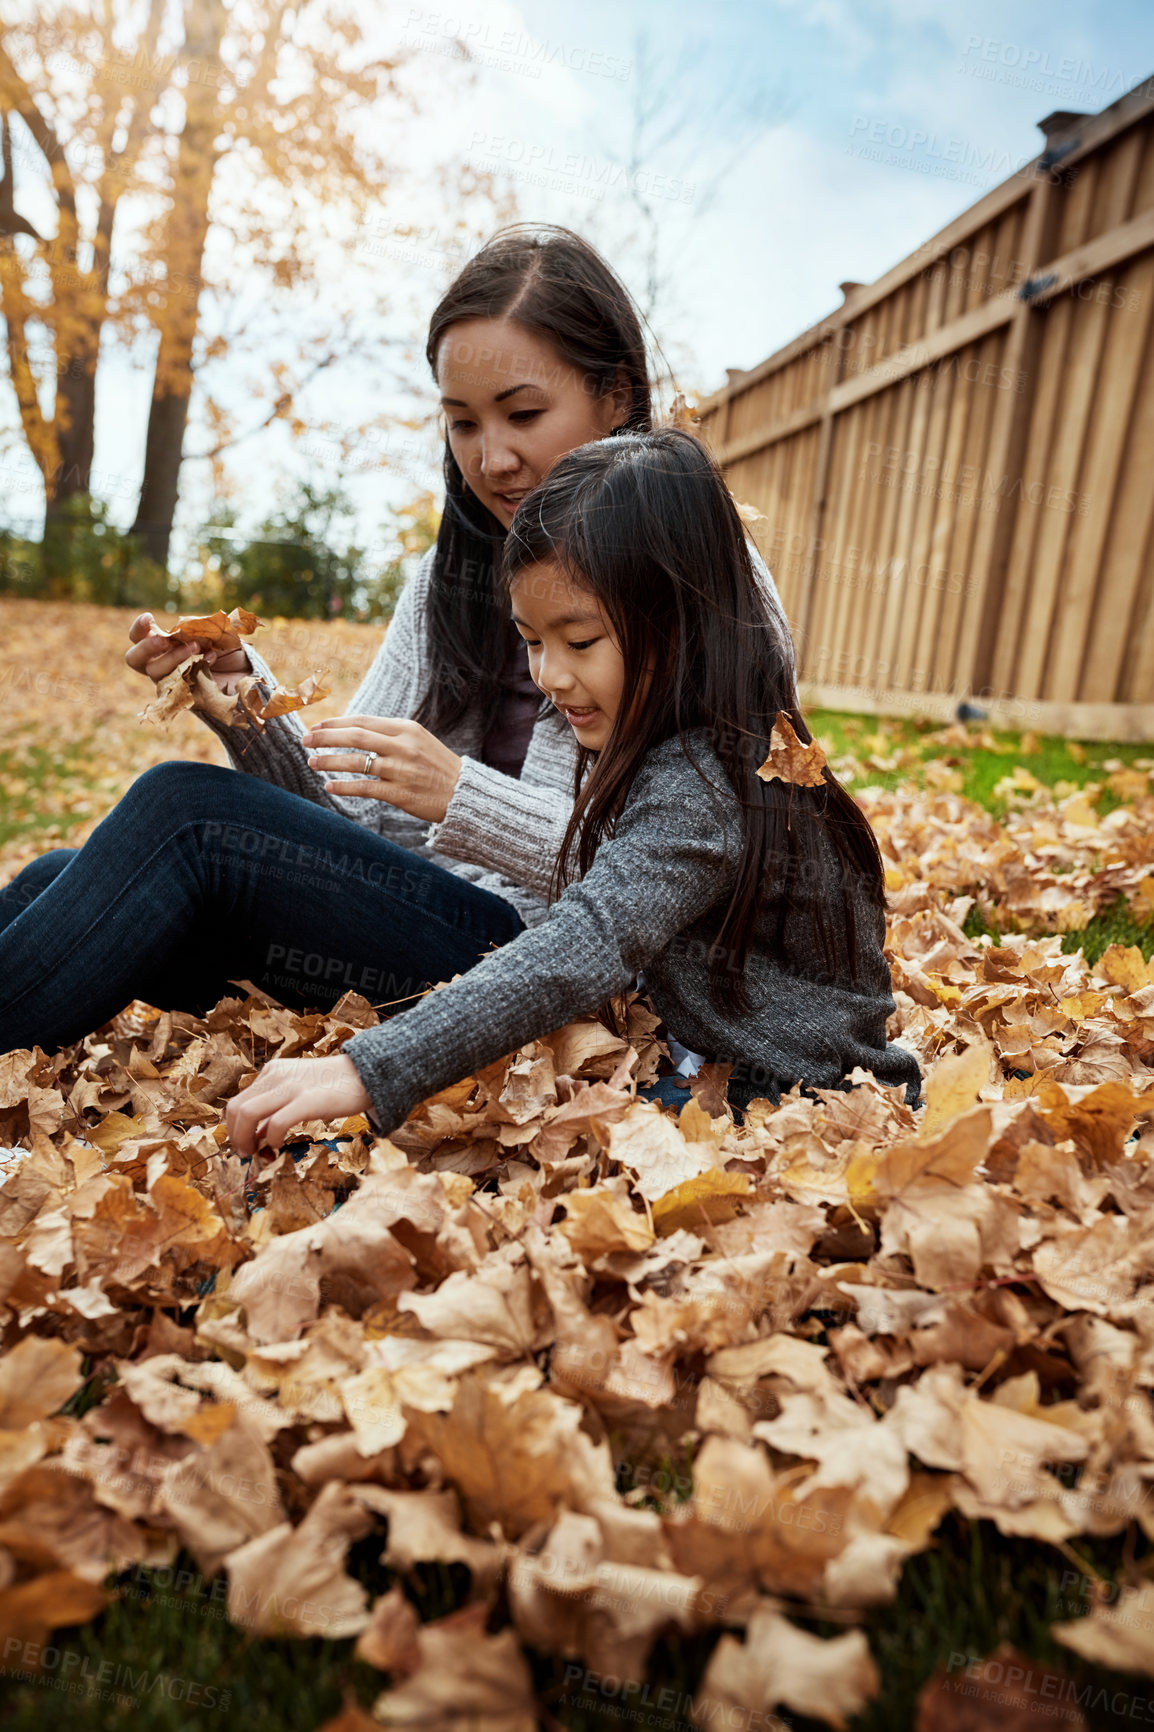 Buy stock photo Shot of an adorable little girl enjoying an autumn day outdoors